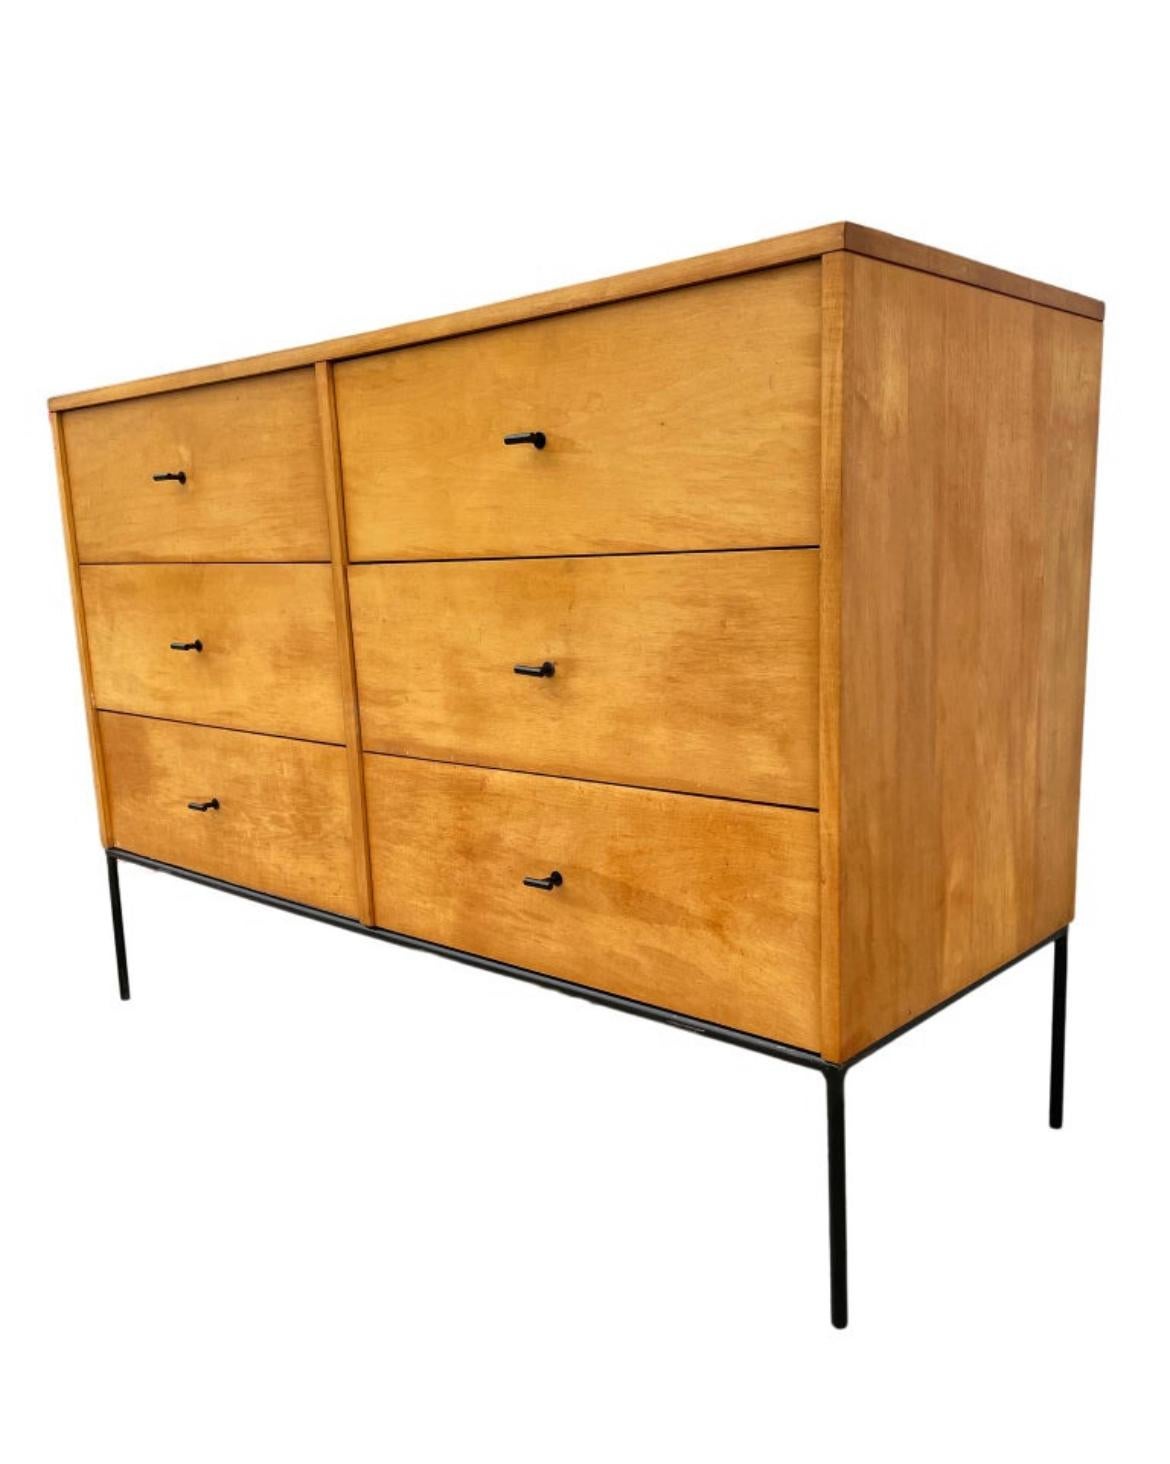 Woodwork Midcentury Paul McCobb 6 Drawer Dresser Credenza #1509 Blonde Maple T Pulls For Sale